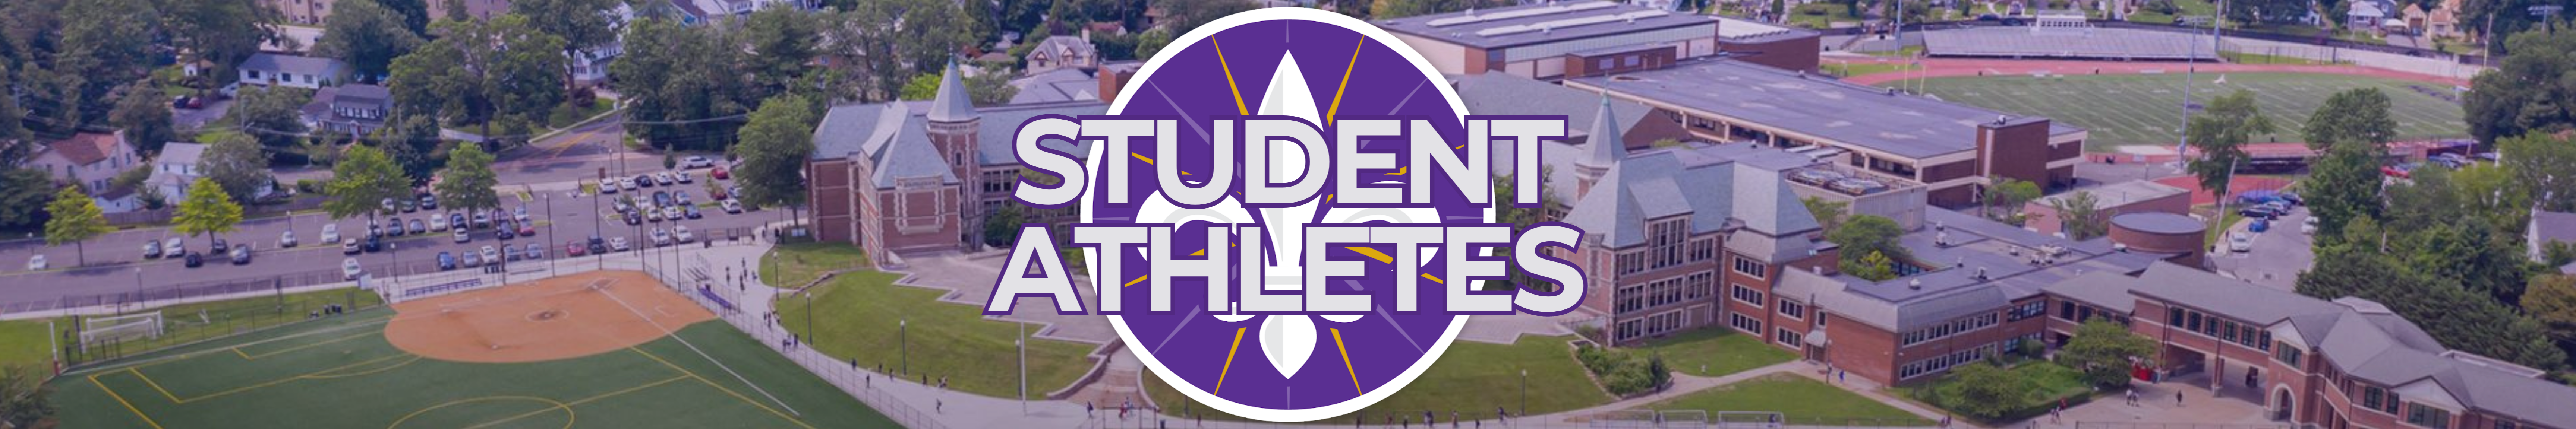 Student Athletes banner